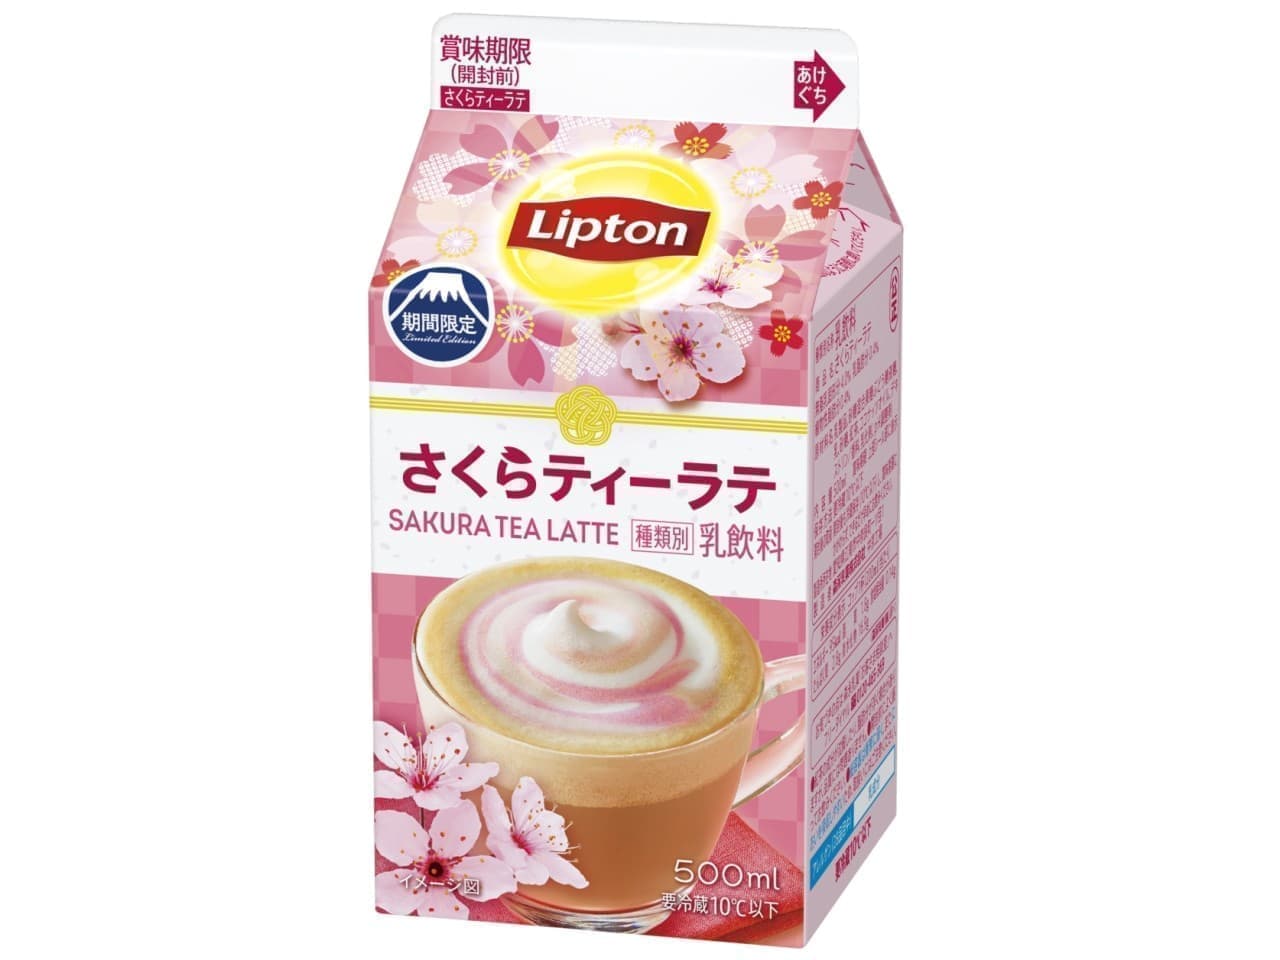 Lipton "Lipton Sakura Tea Latte"